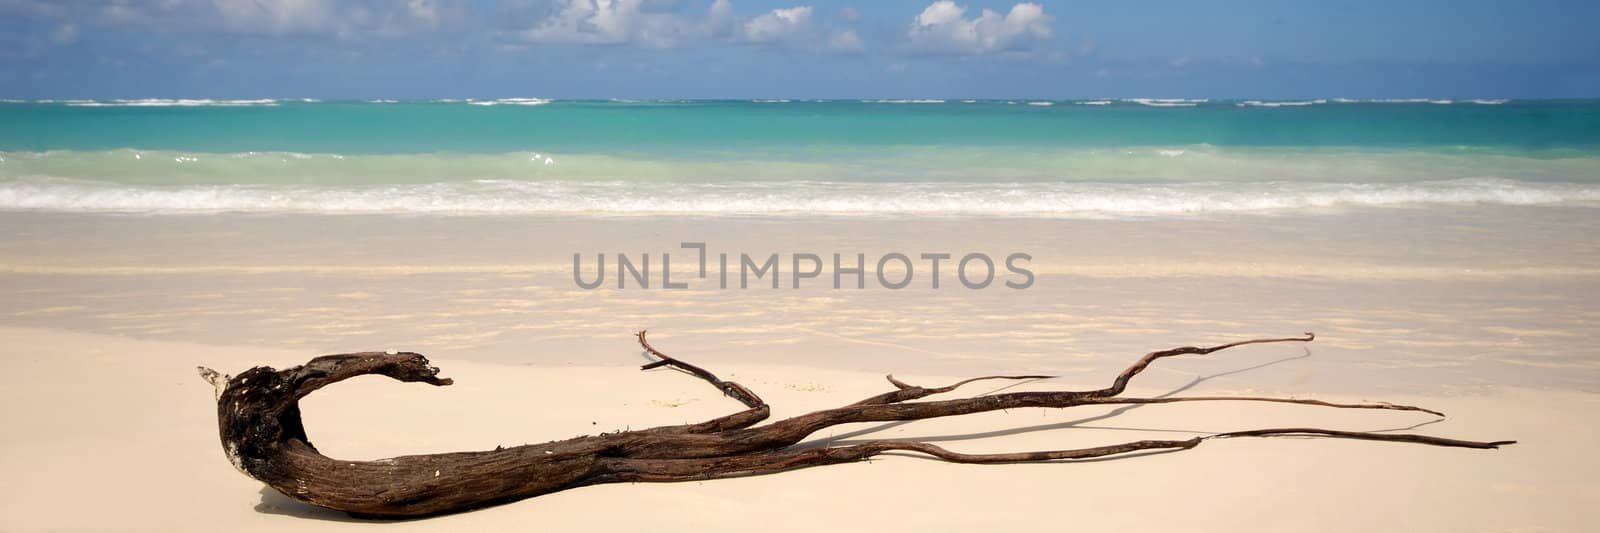 Driftwood on an exotic beach